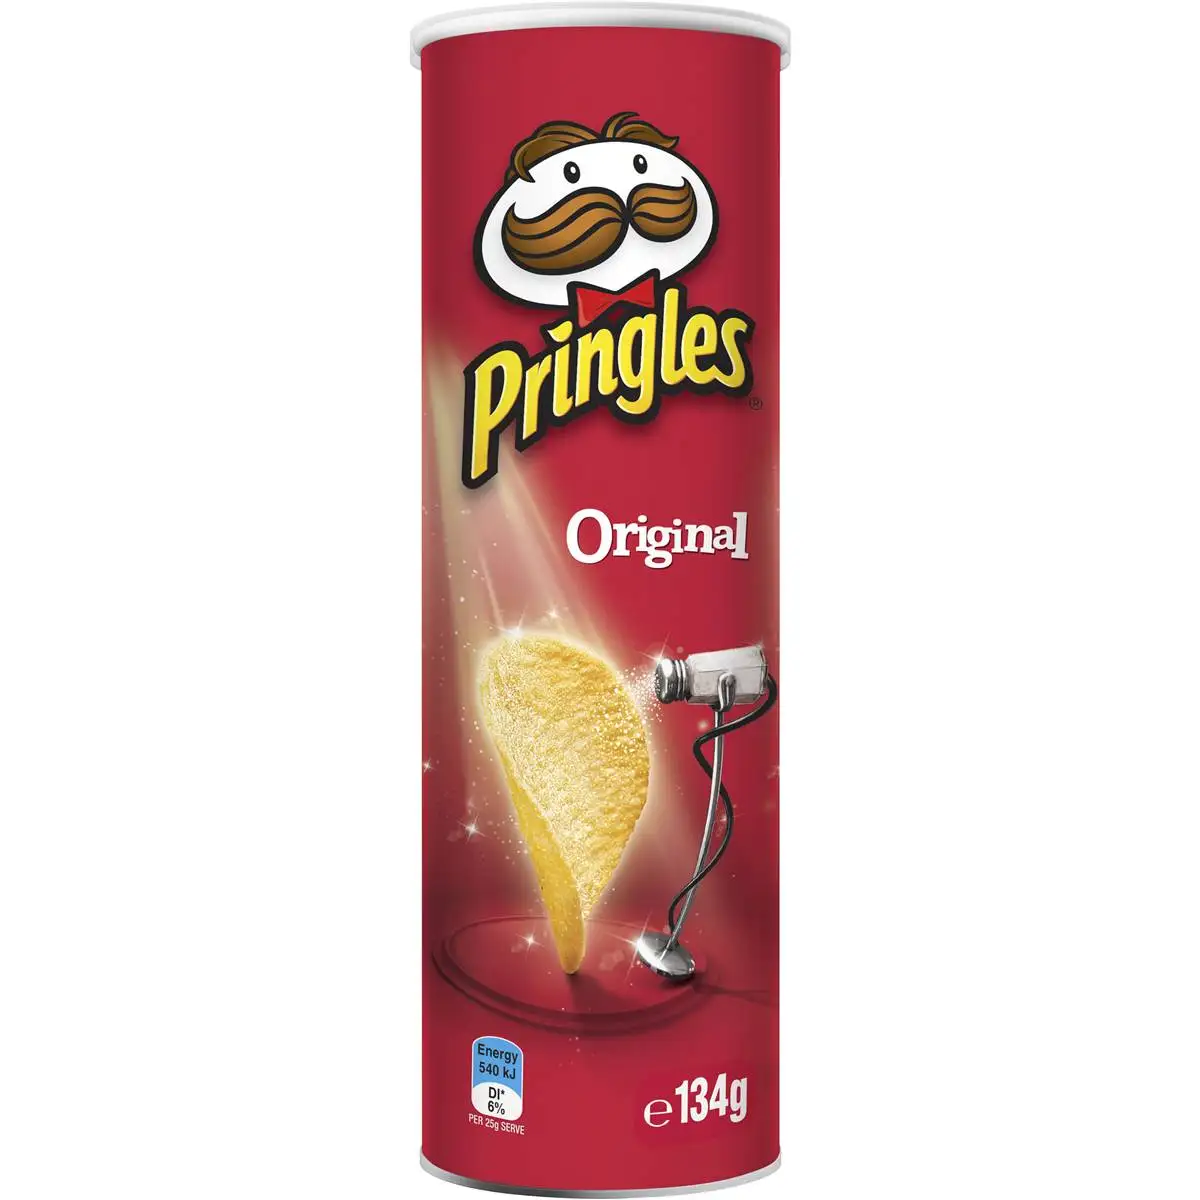 Wholesale world wide brand pringles potato chips for sale/Wholesale Standard PRINGLES 165g Potato Chips